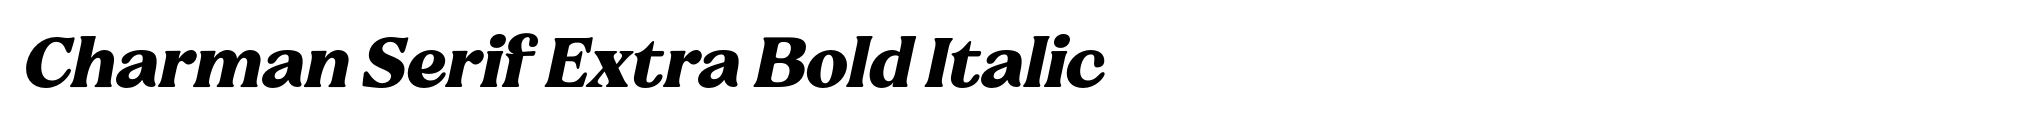 Charman Serif Extra Bold Italic image